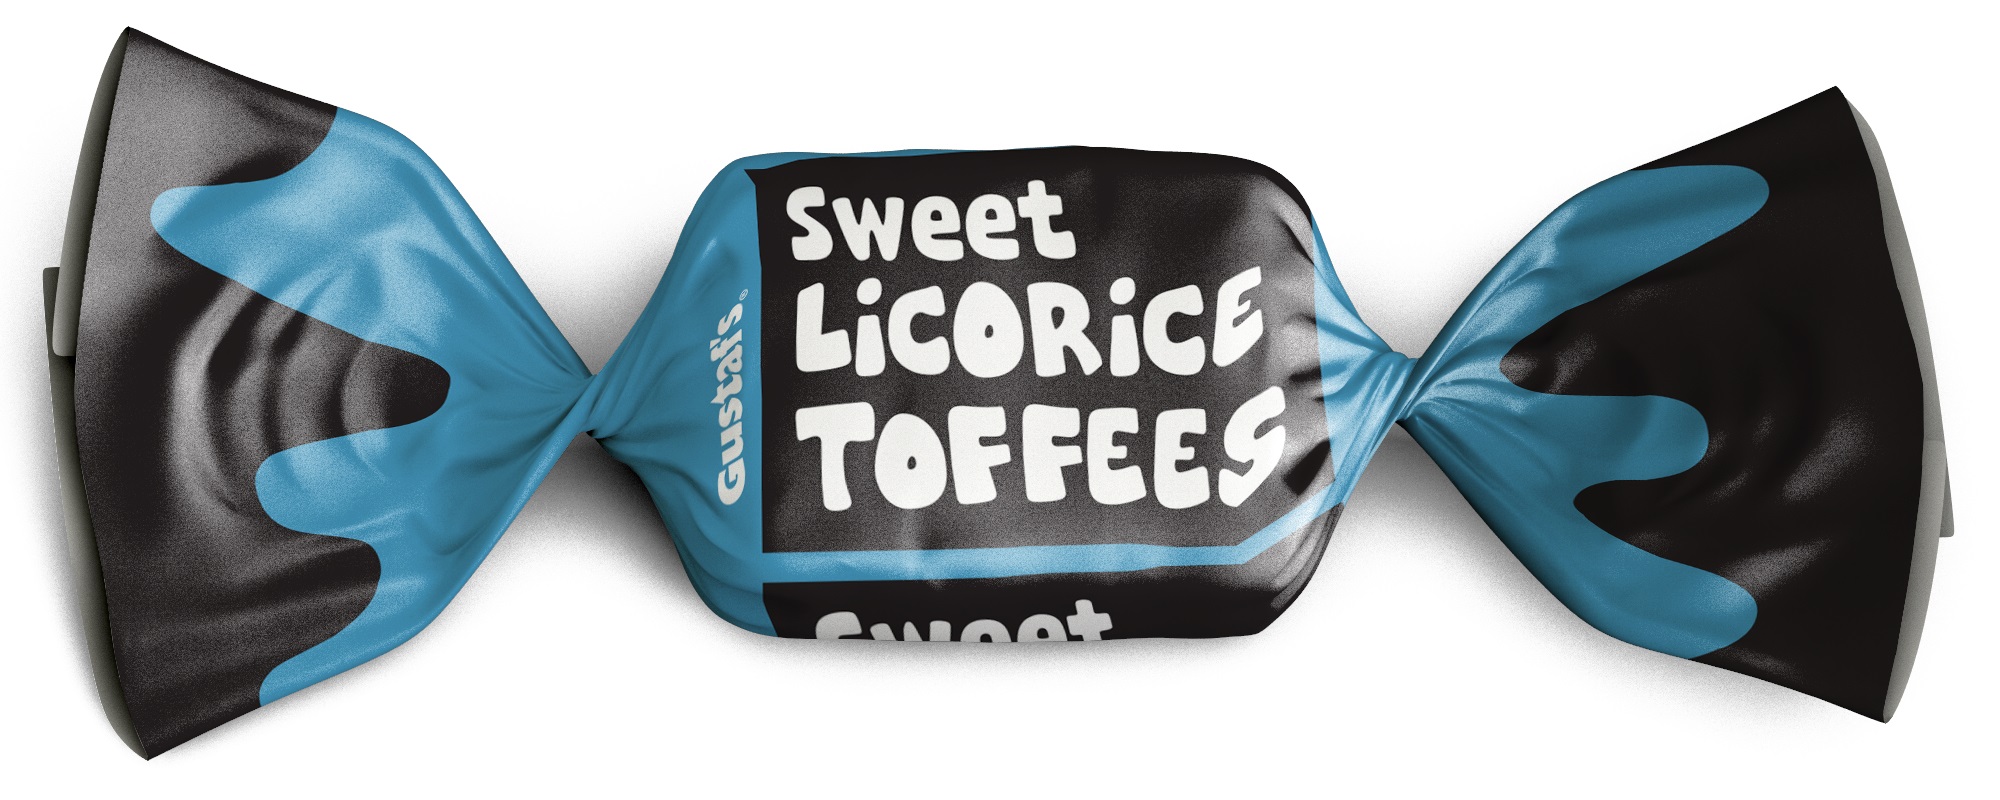 VERBURG - SWEET LICORICE TOFFEES